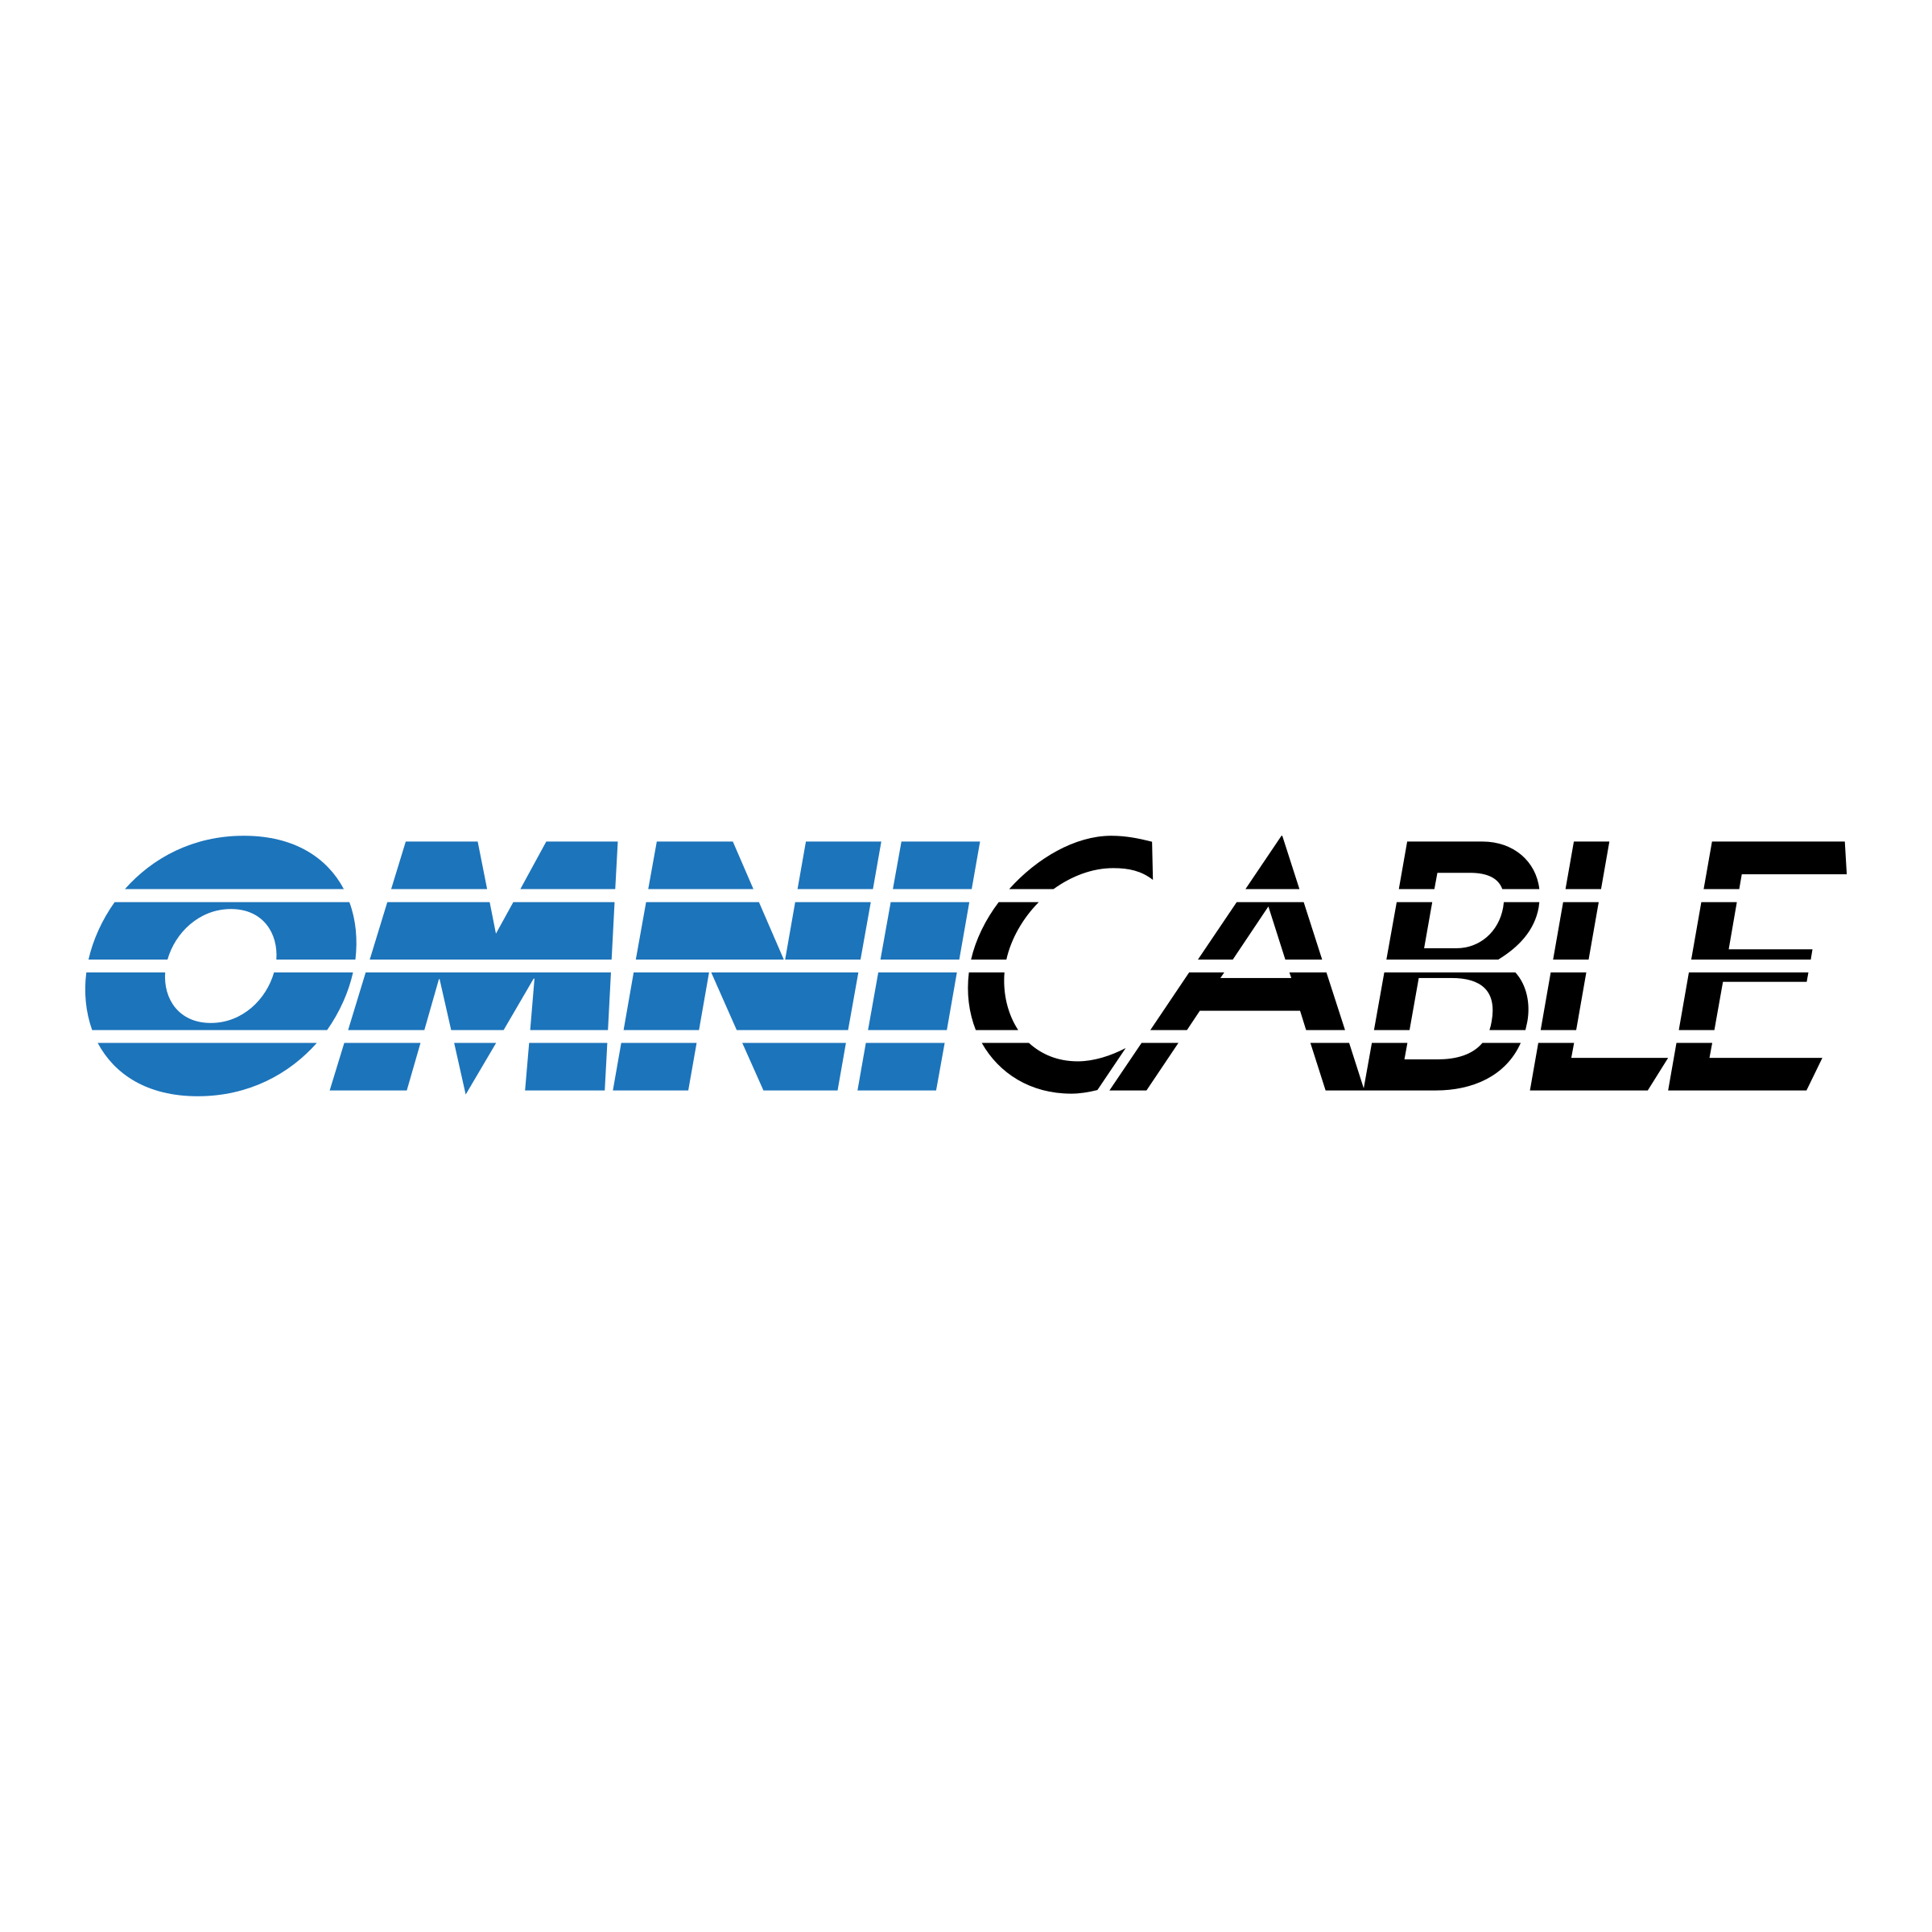 Omni Logo - Omni Cable Logo PNG Transparent & SVG Vector - Freebie Supply